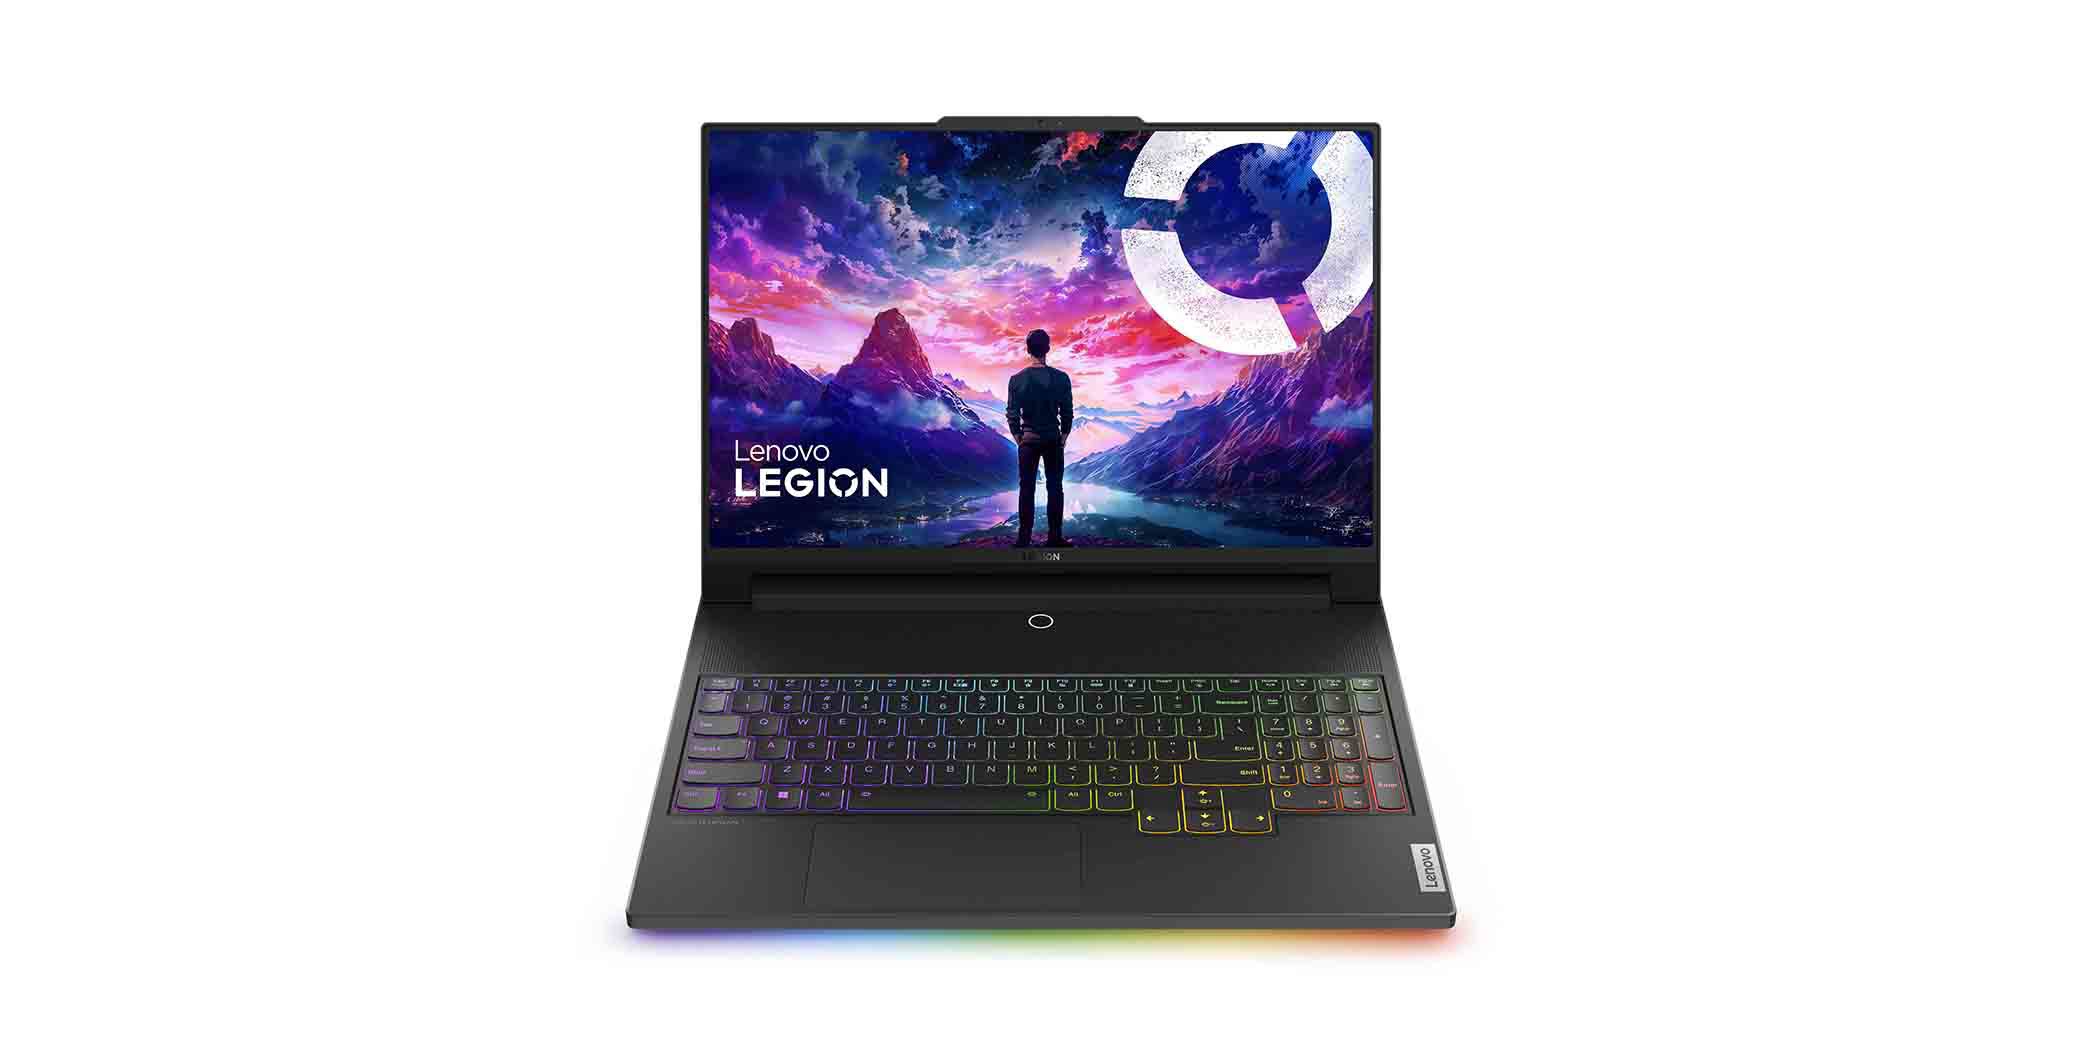 Lenovo 9 series - laptops